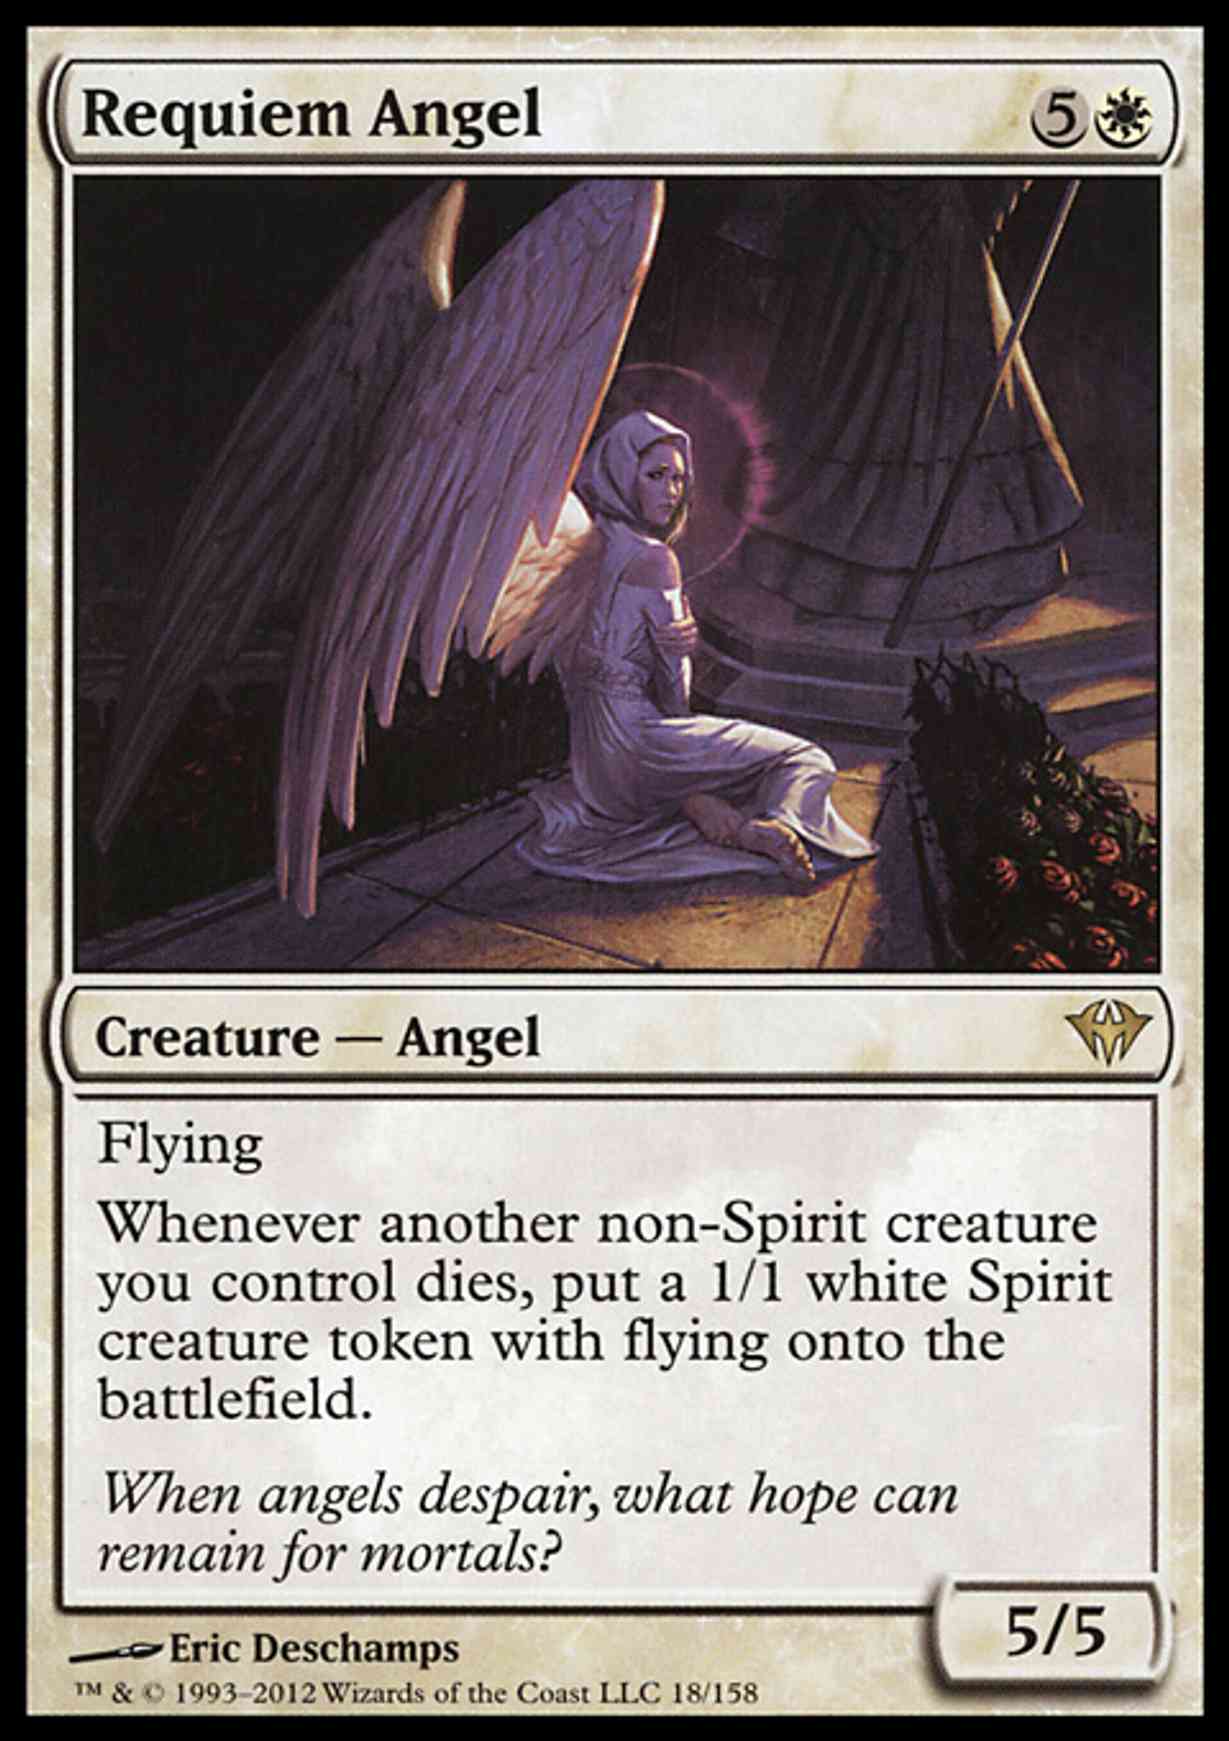 Requiem Angel magic card front